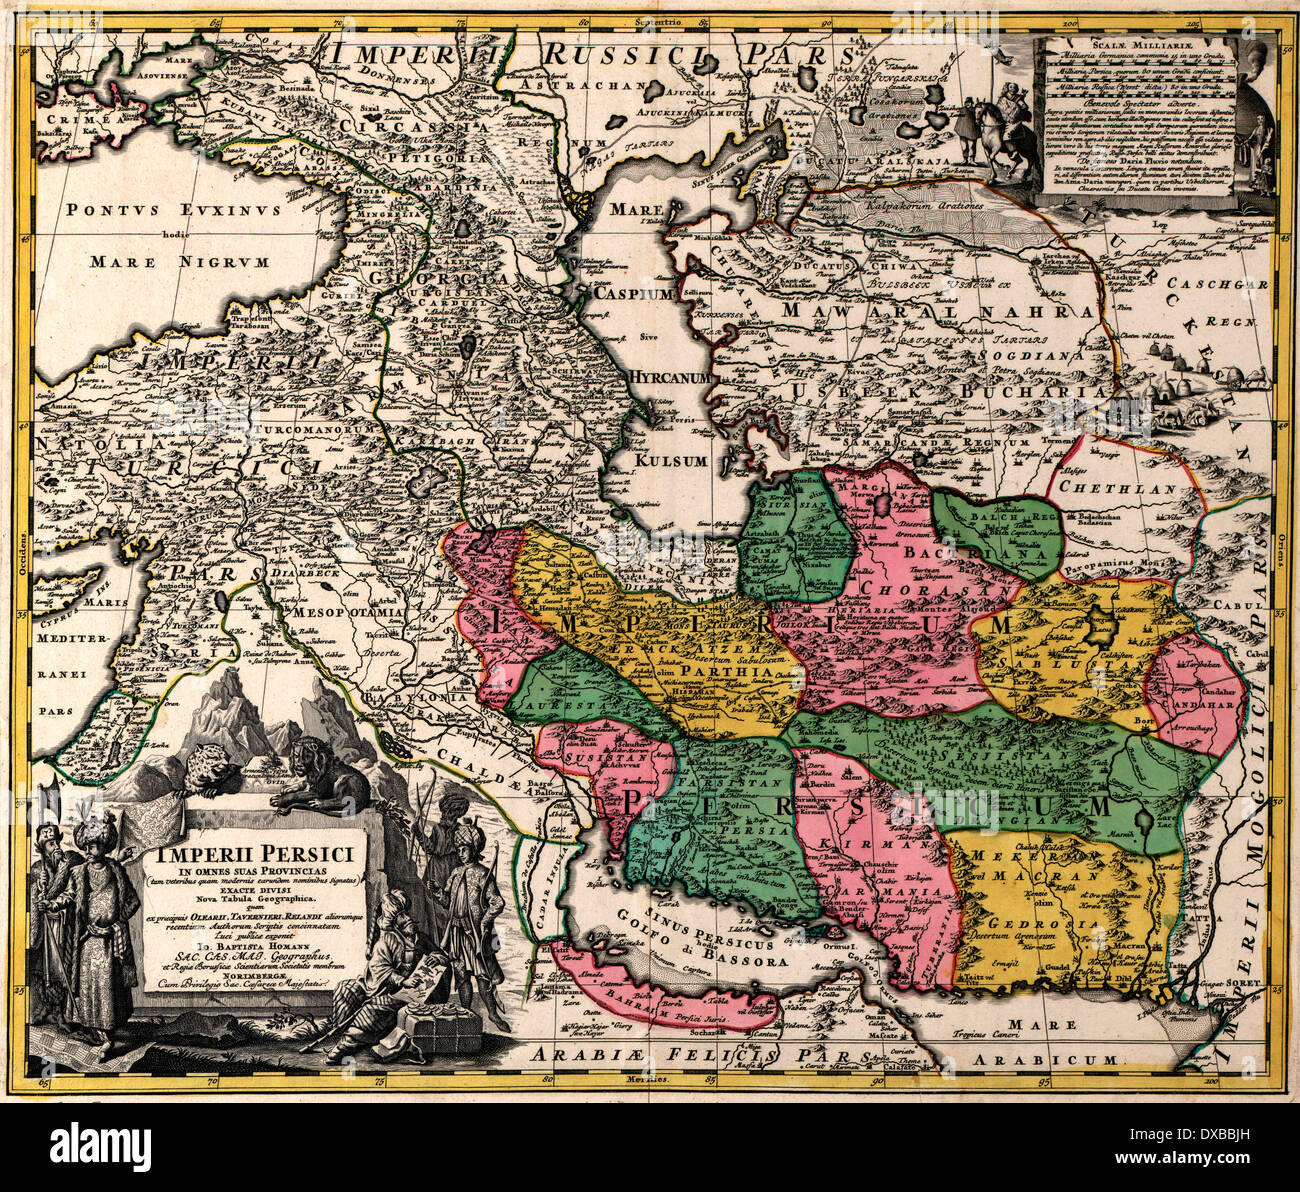 Imperial Persia, 1724 Stock Photo